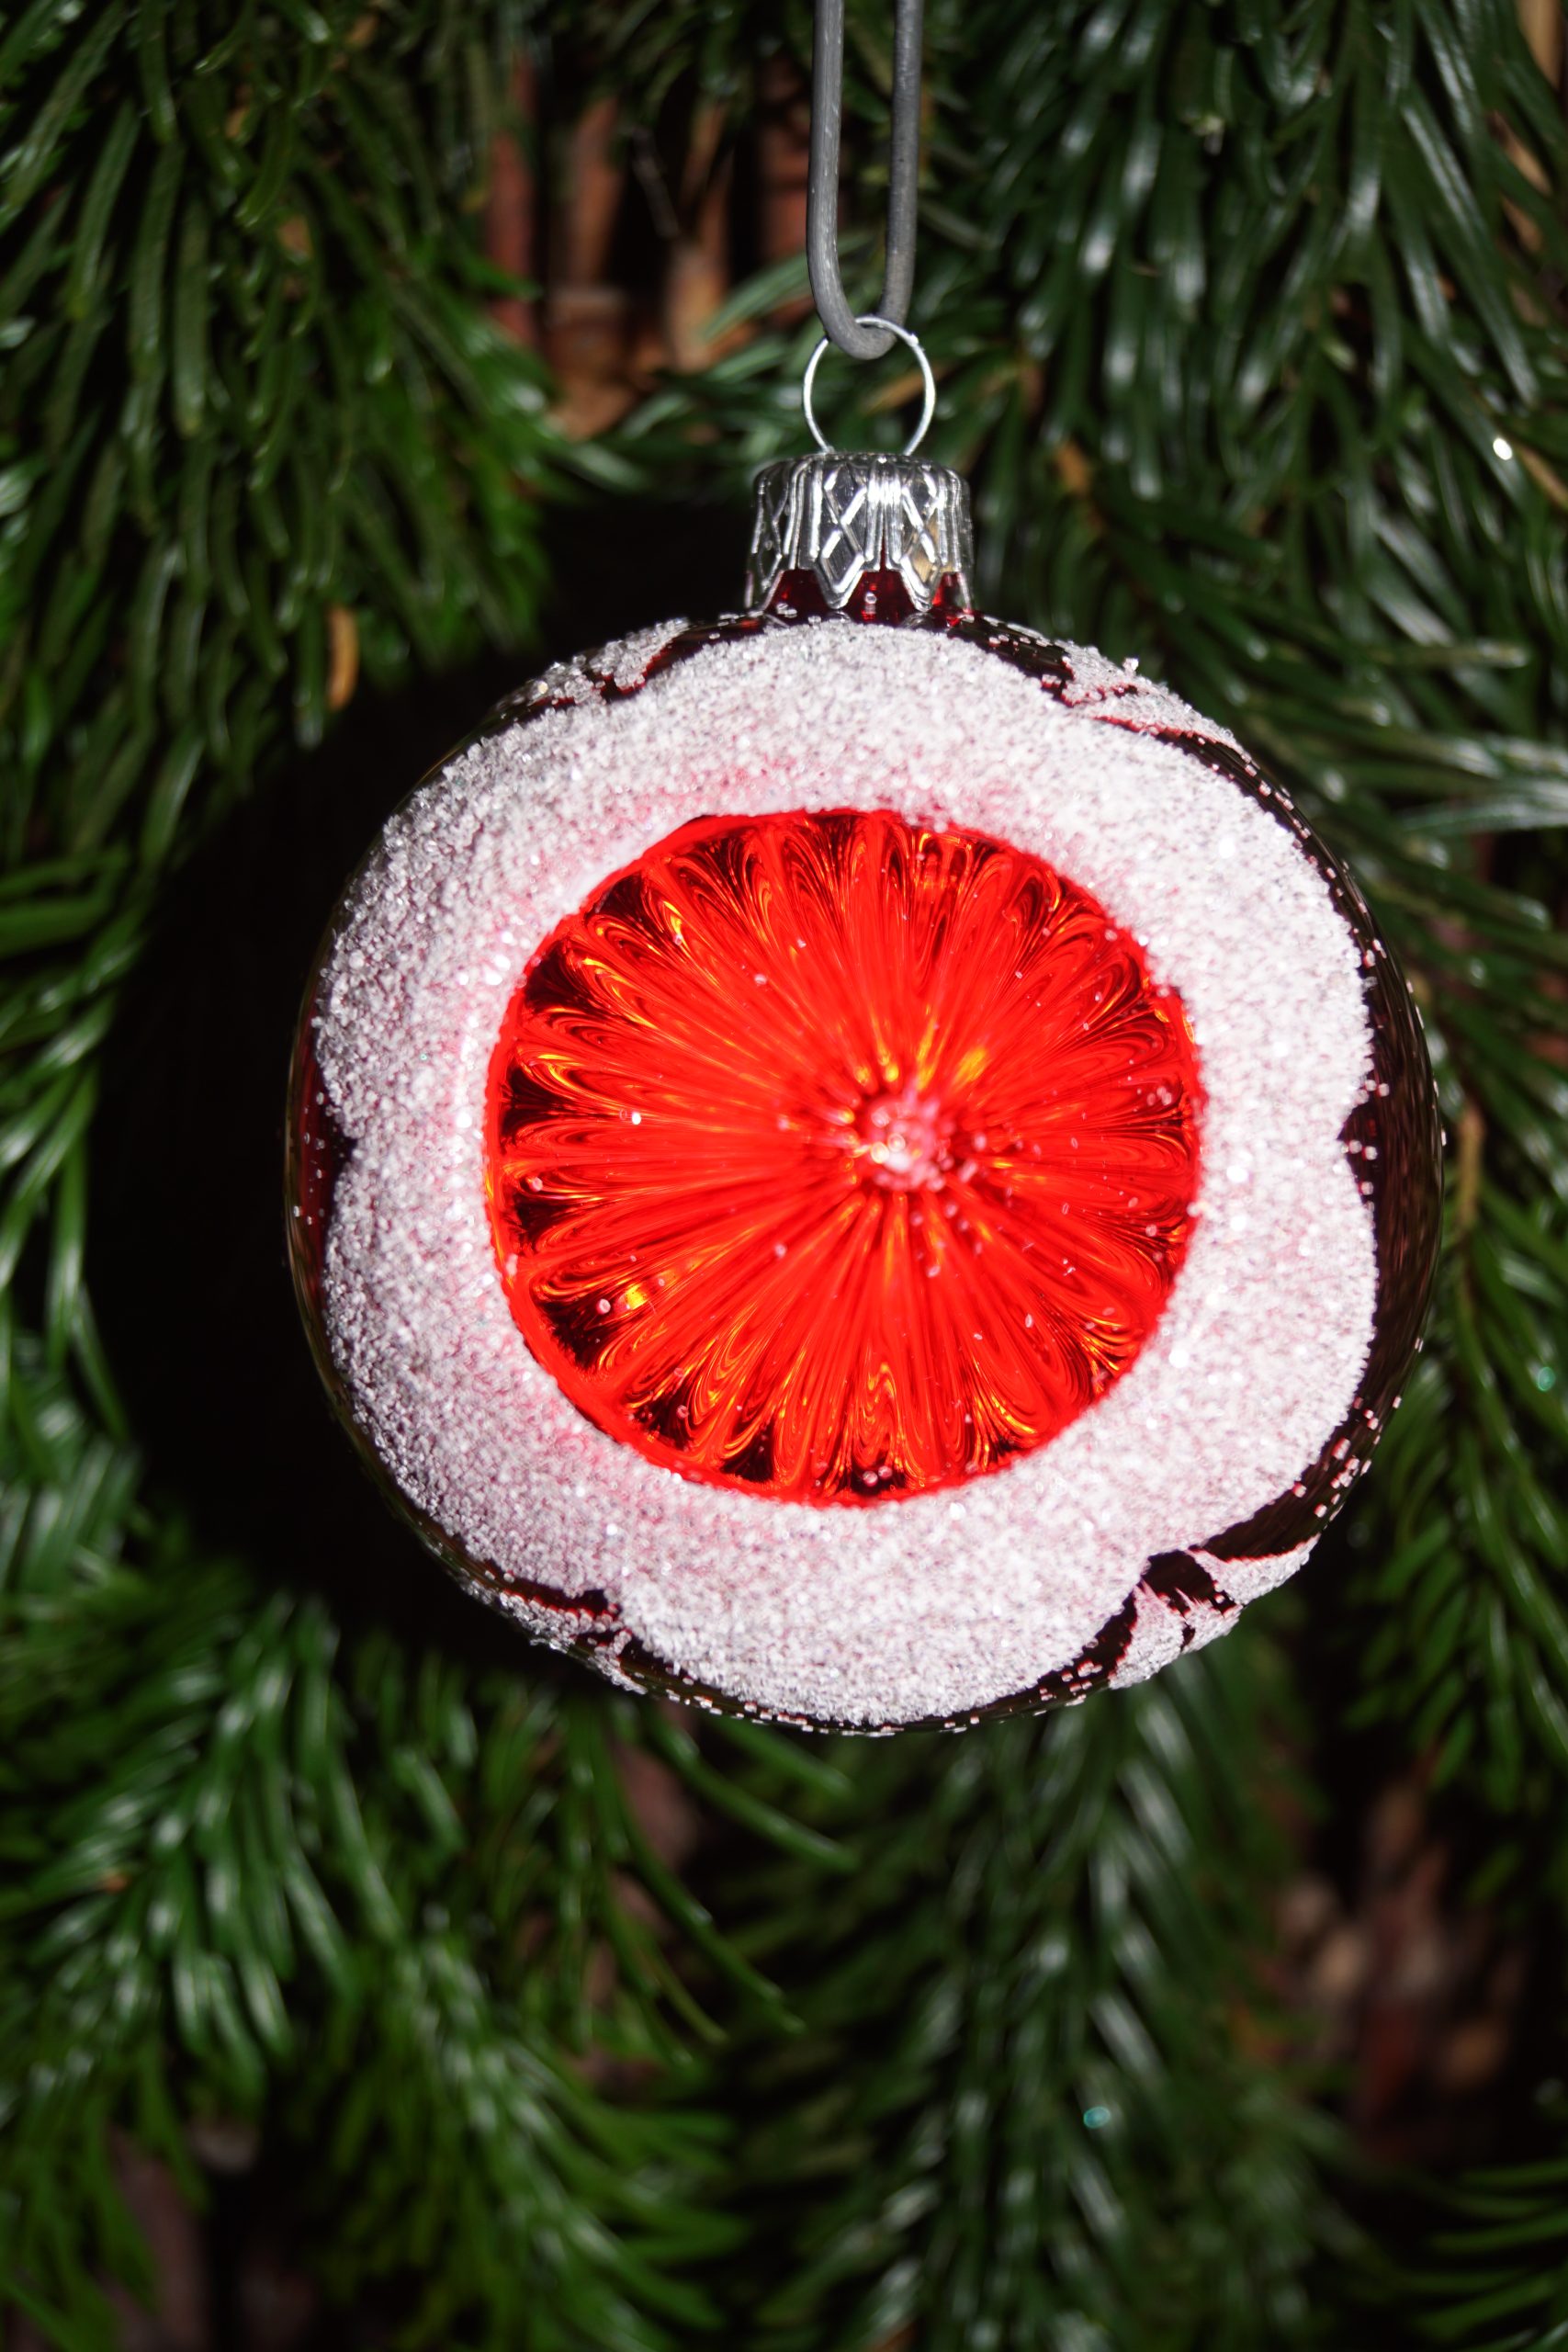 Julekugle 8 cm, Rød med Spejl, dekoreret med sne